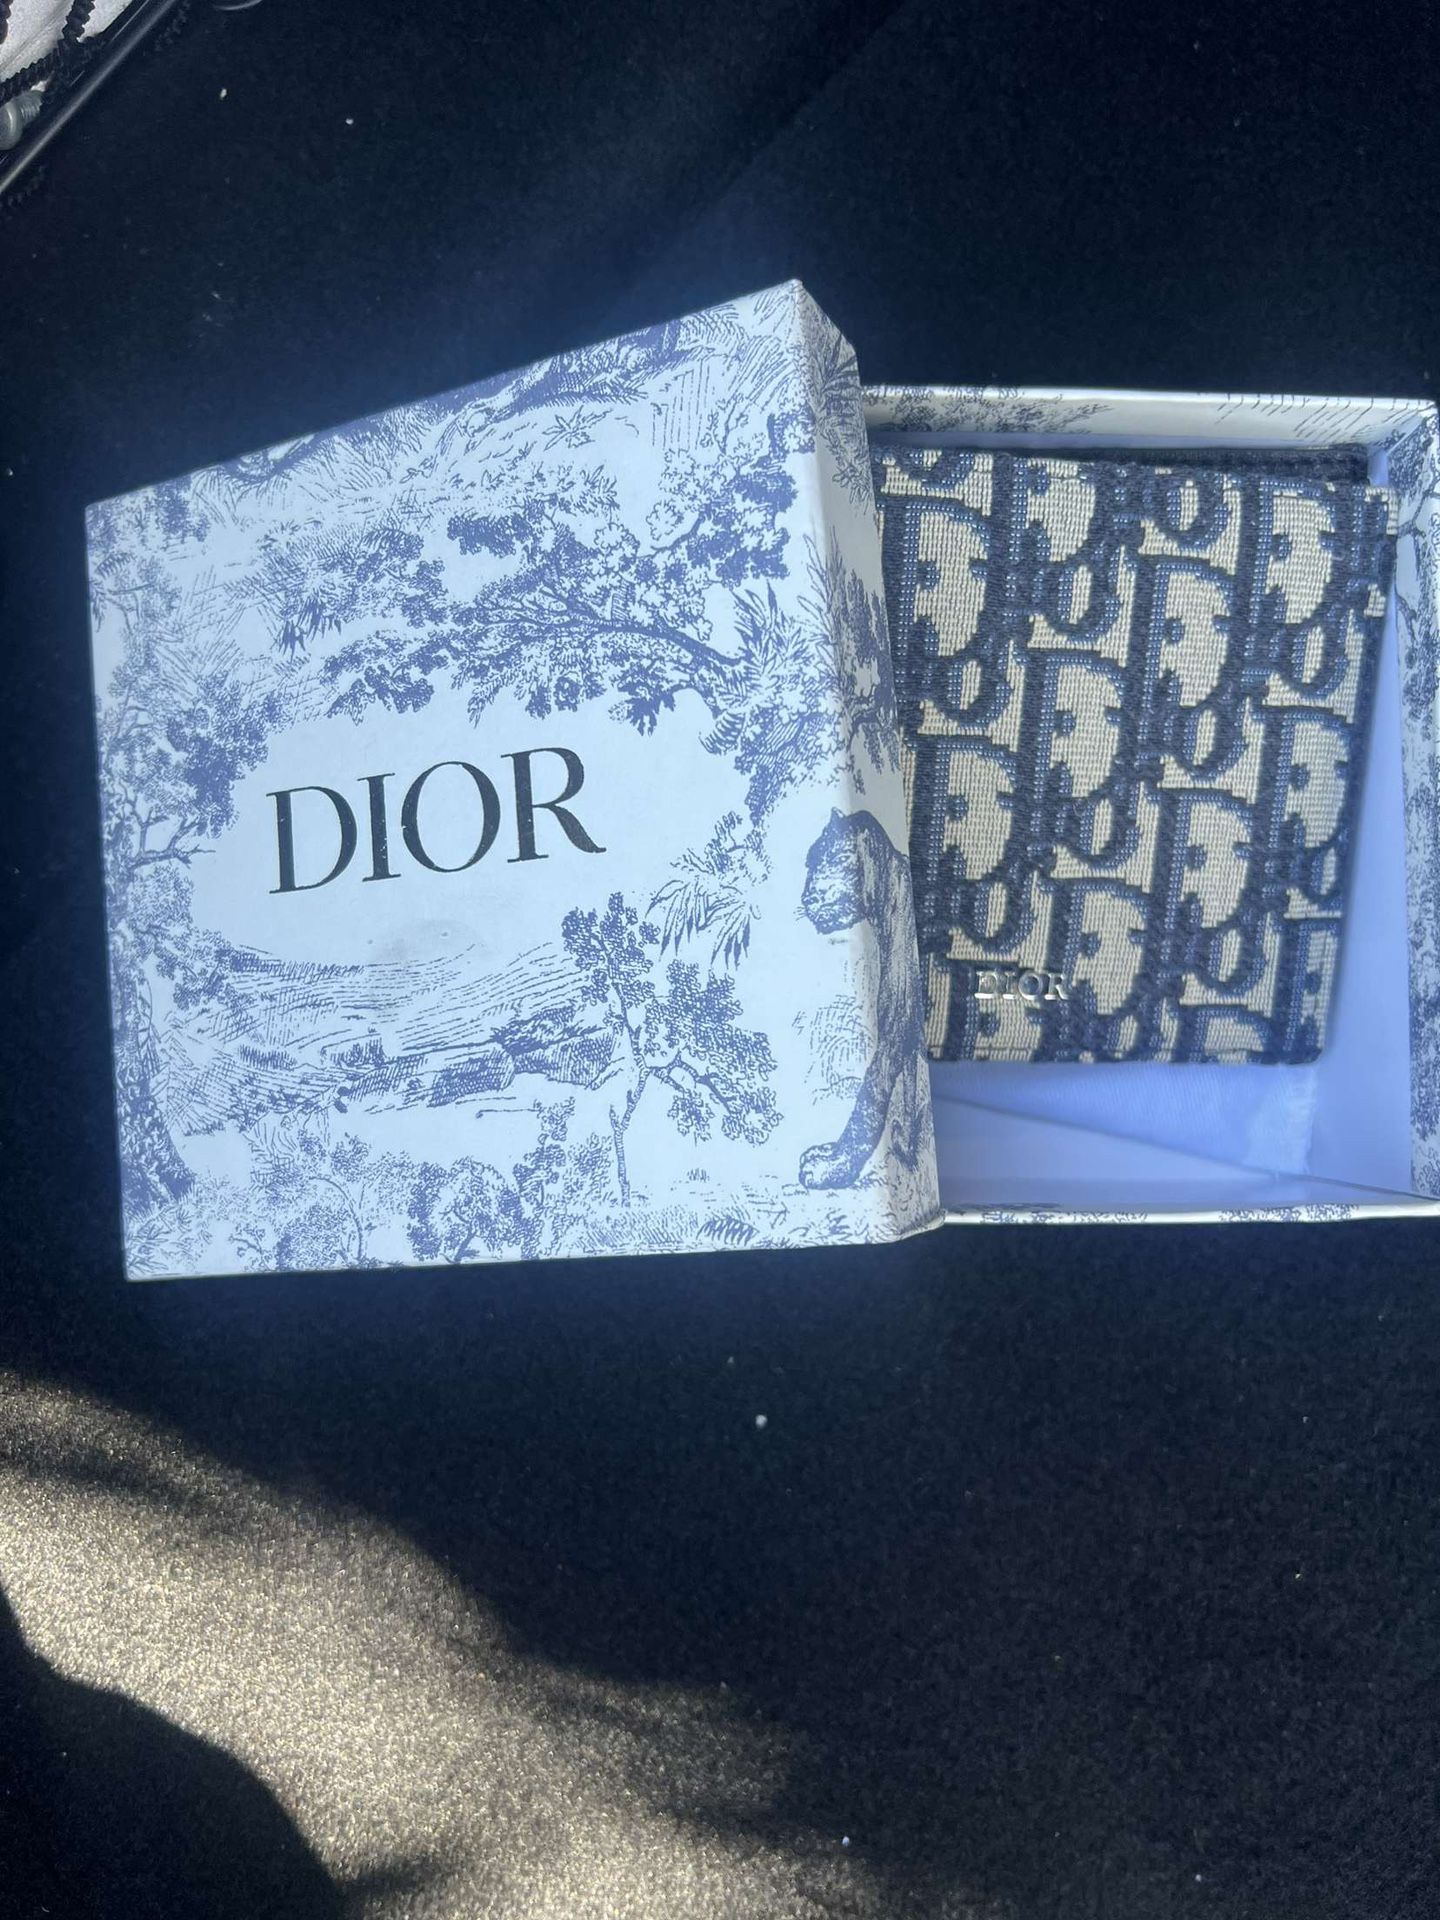 dior box packaging